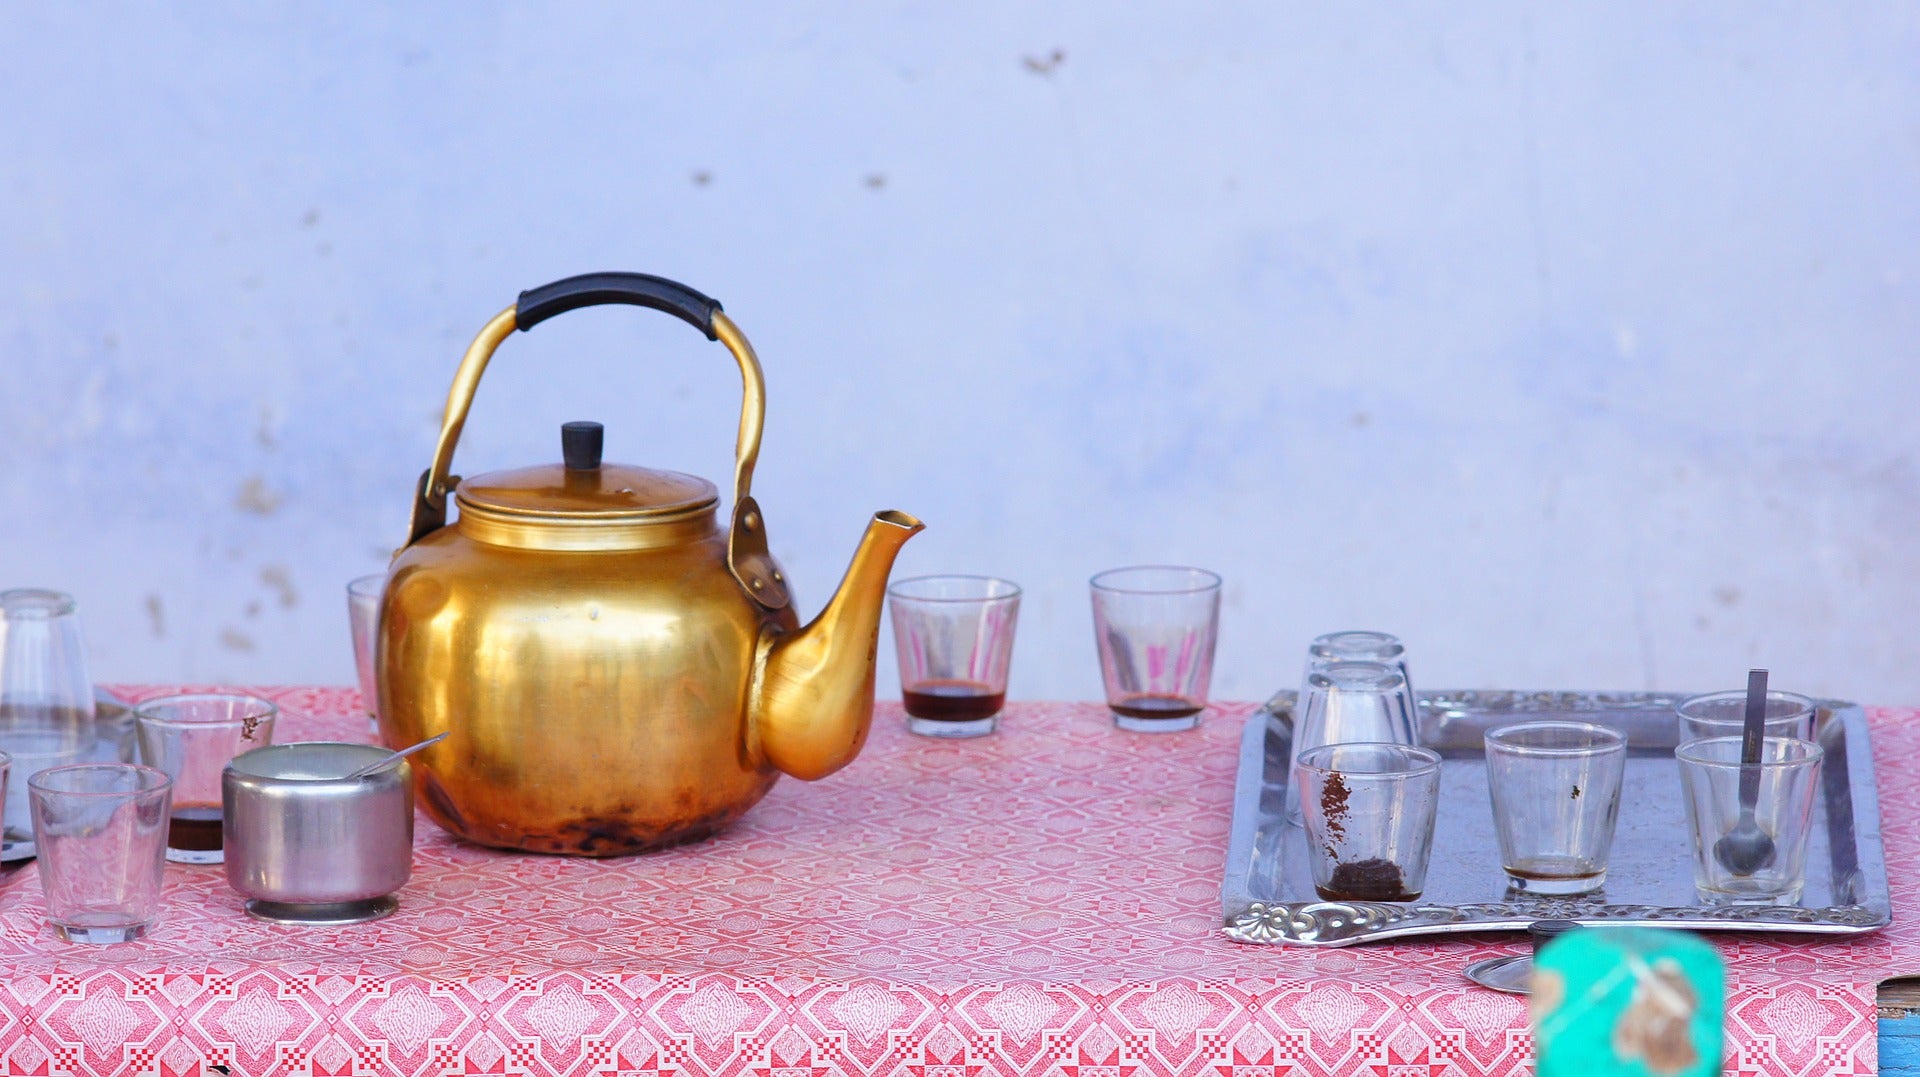 Egyptian teaware